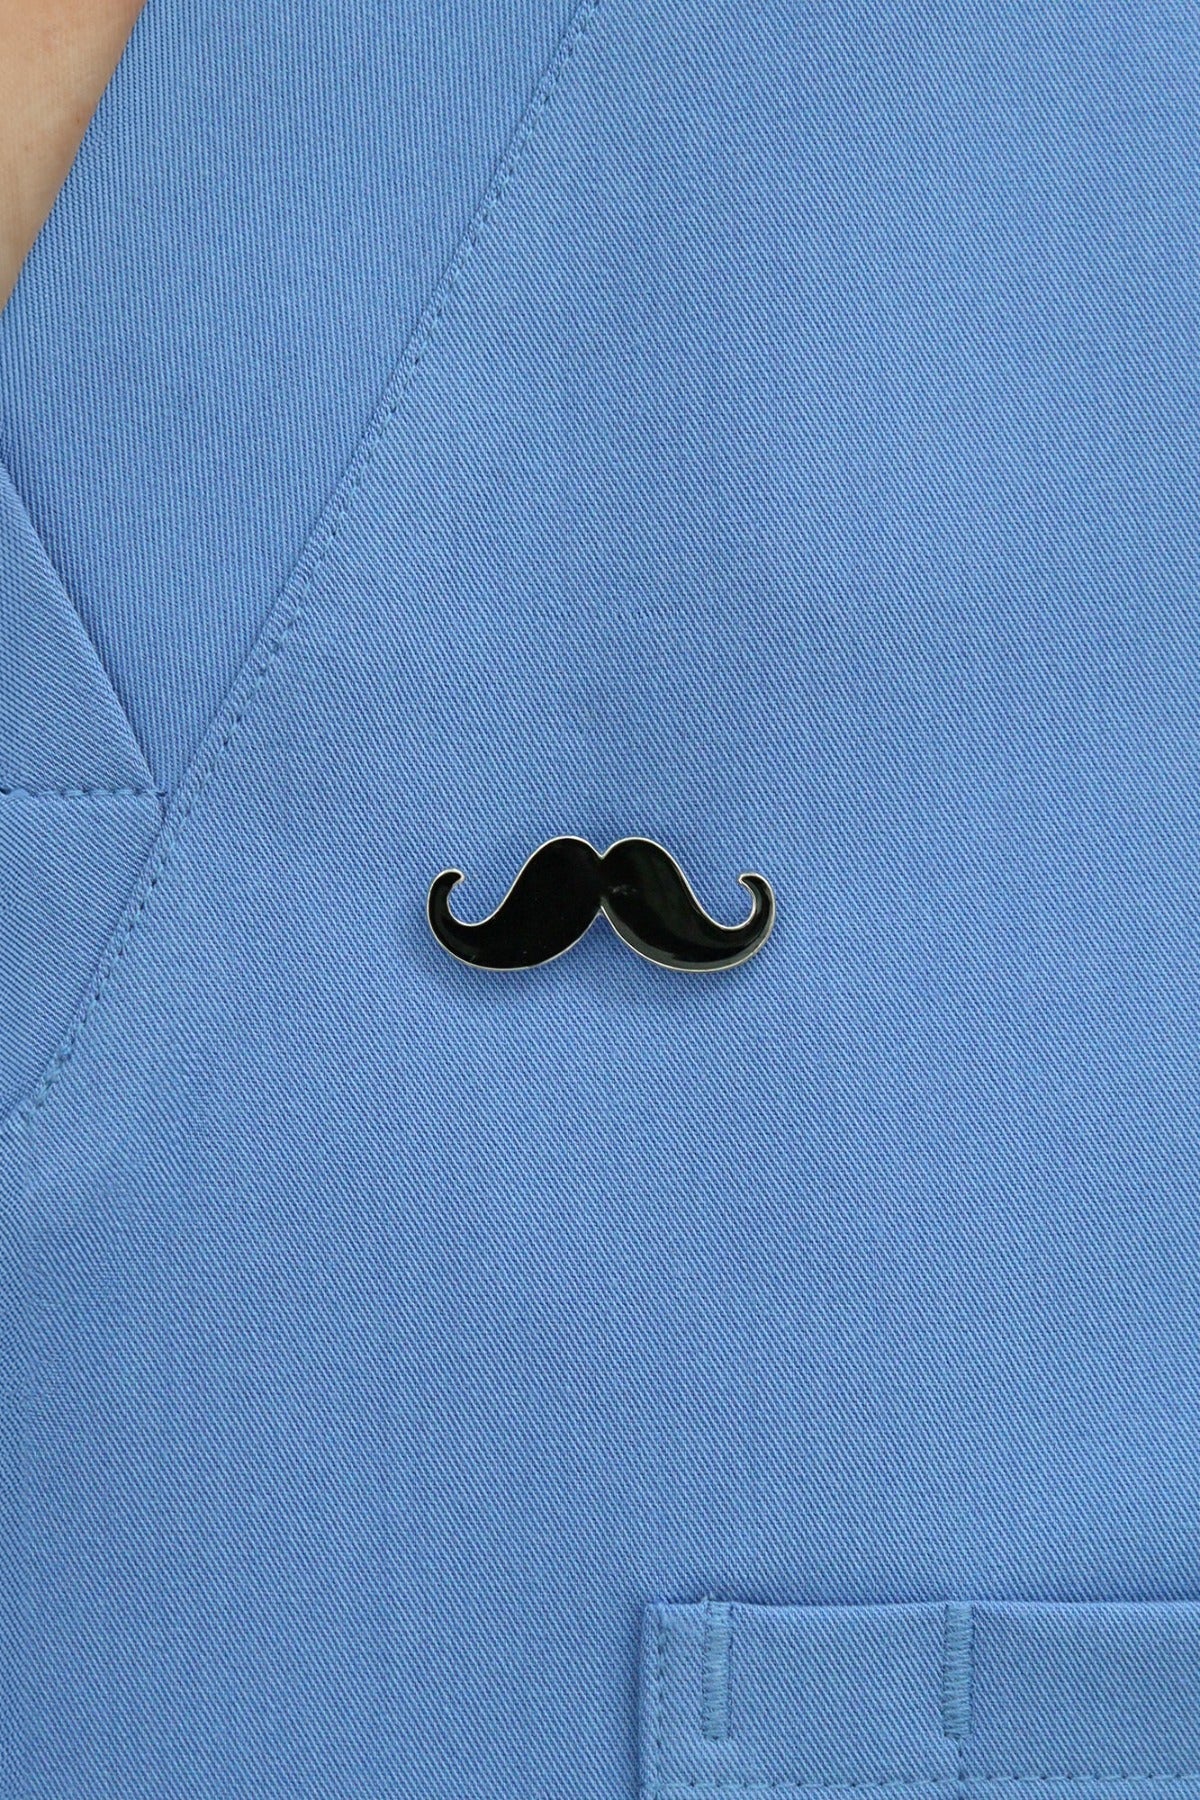 Mustache Pin